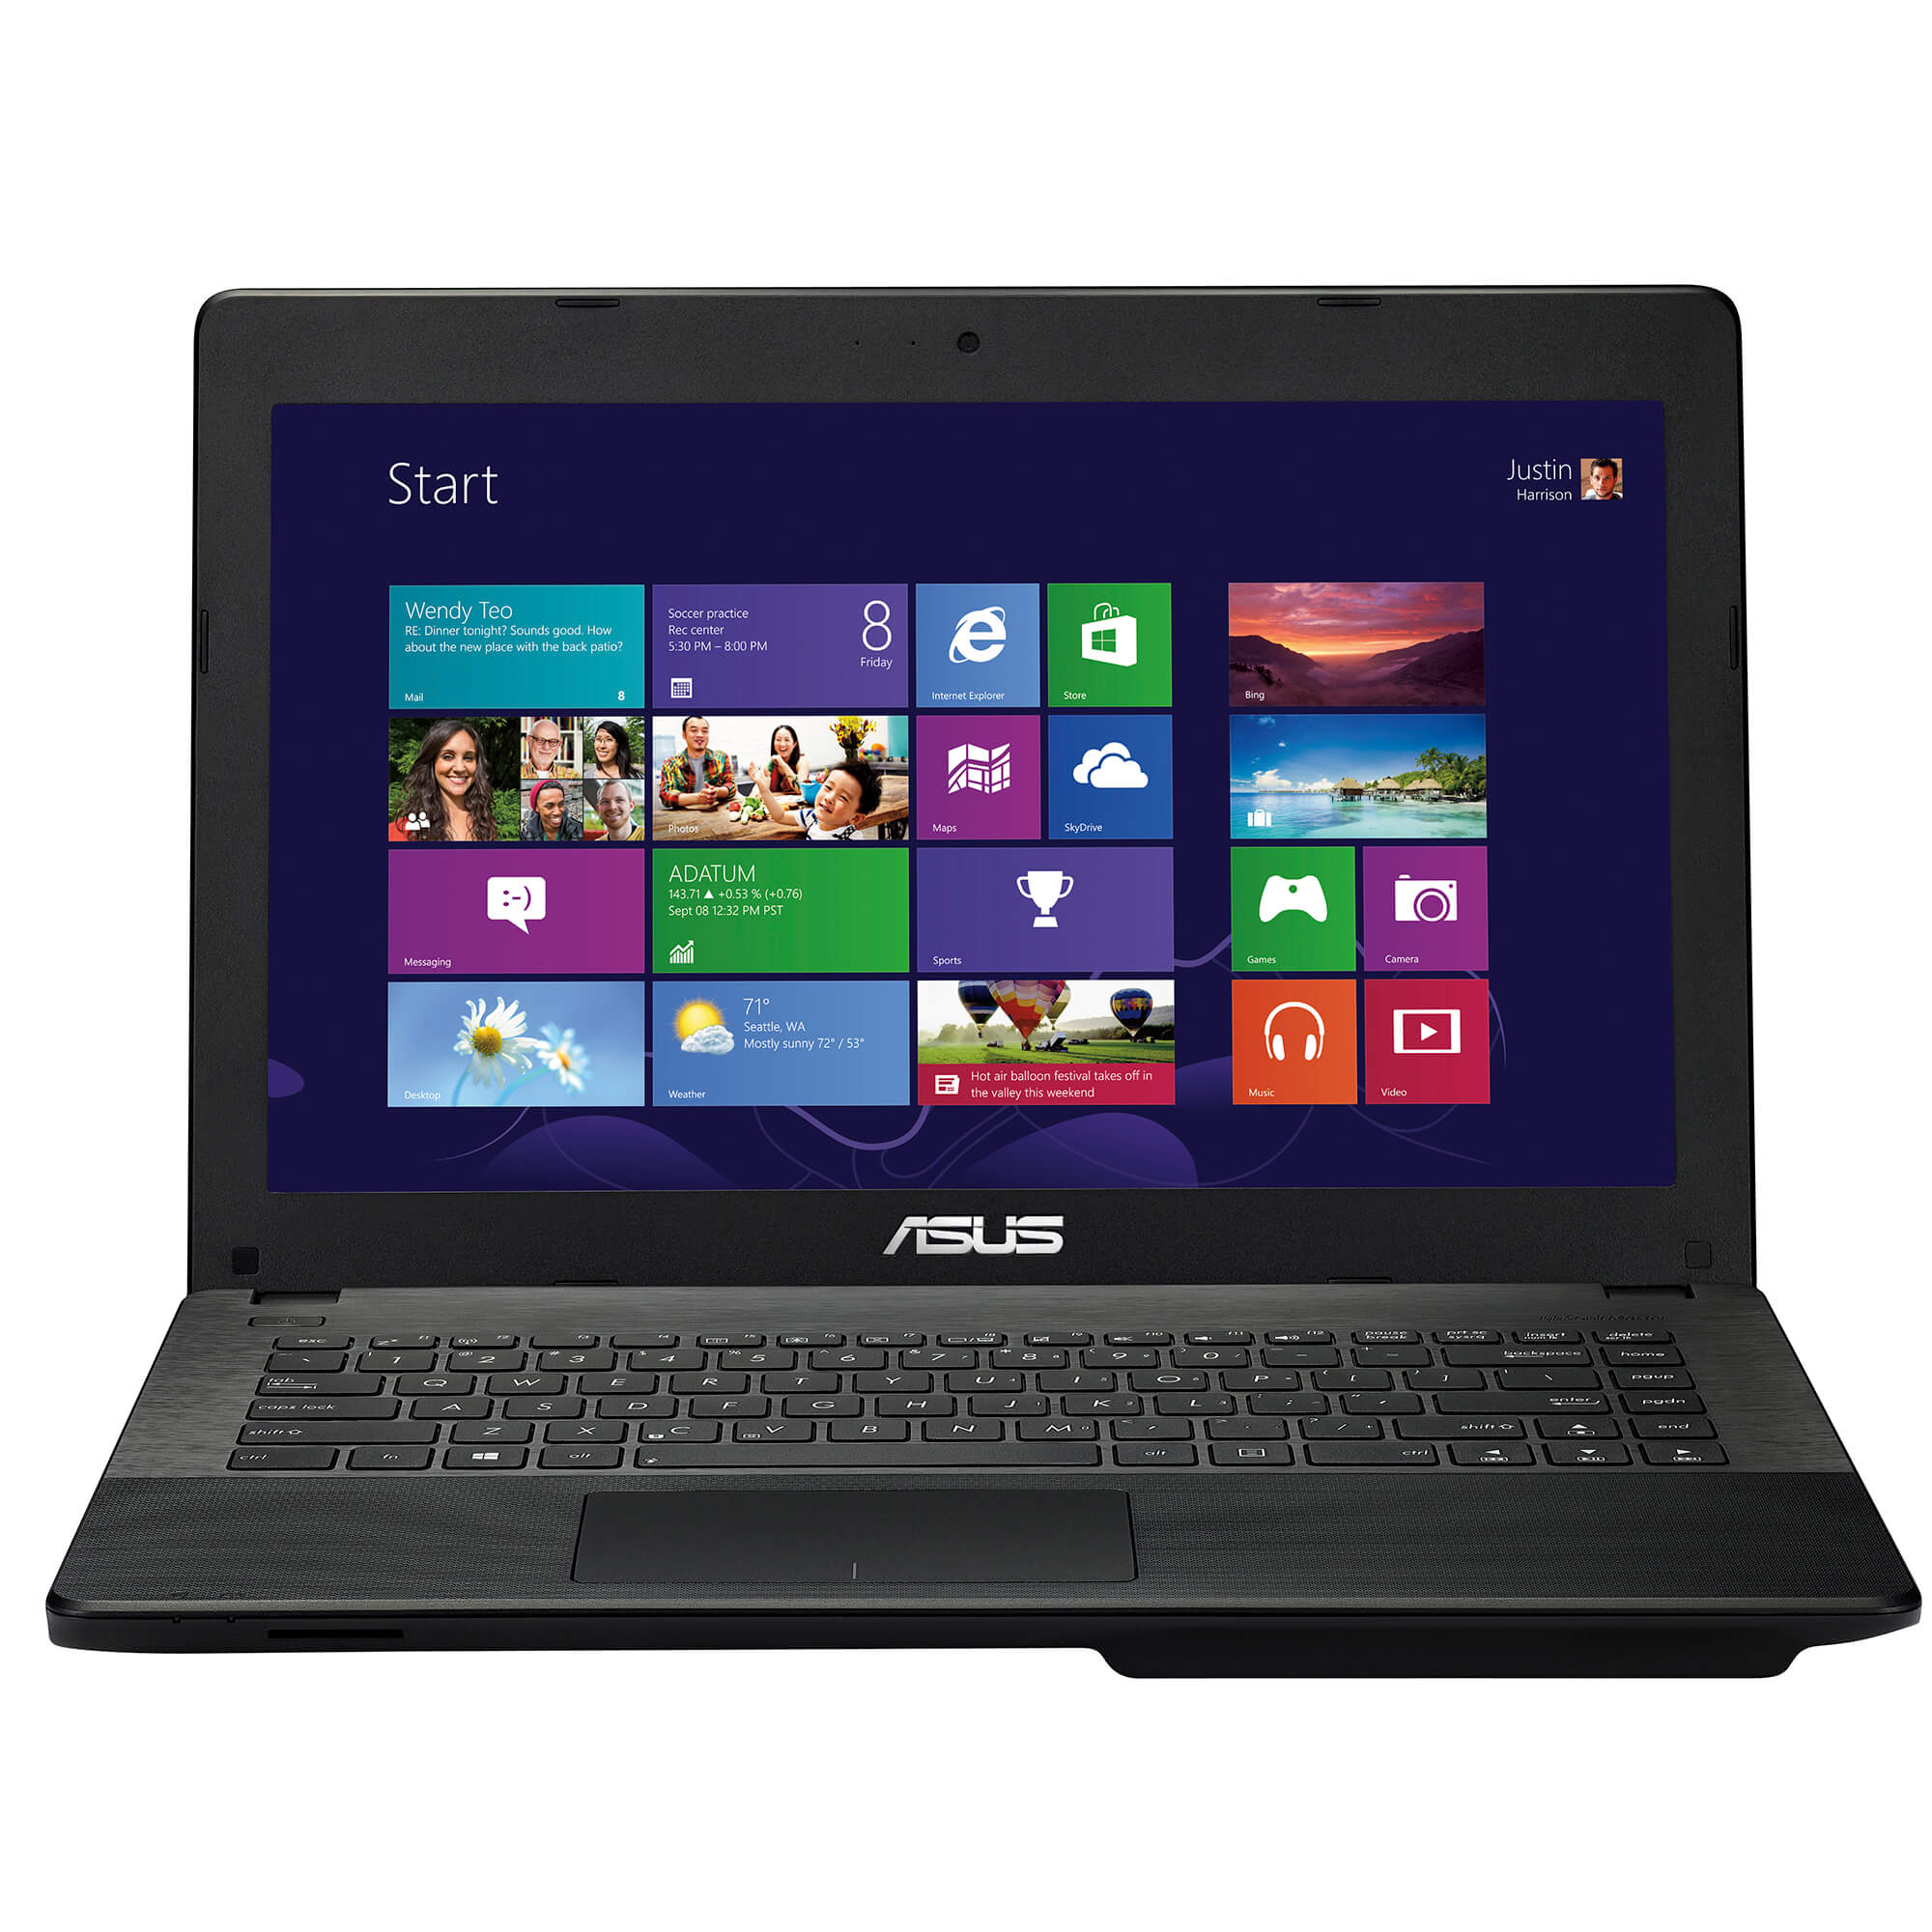  Laptop Asus X451MAV-VX295B, Intel Celeron N2840, 2GB DDR3, HDD 500GB, Intel HD Graphics, Windows 8 